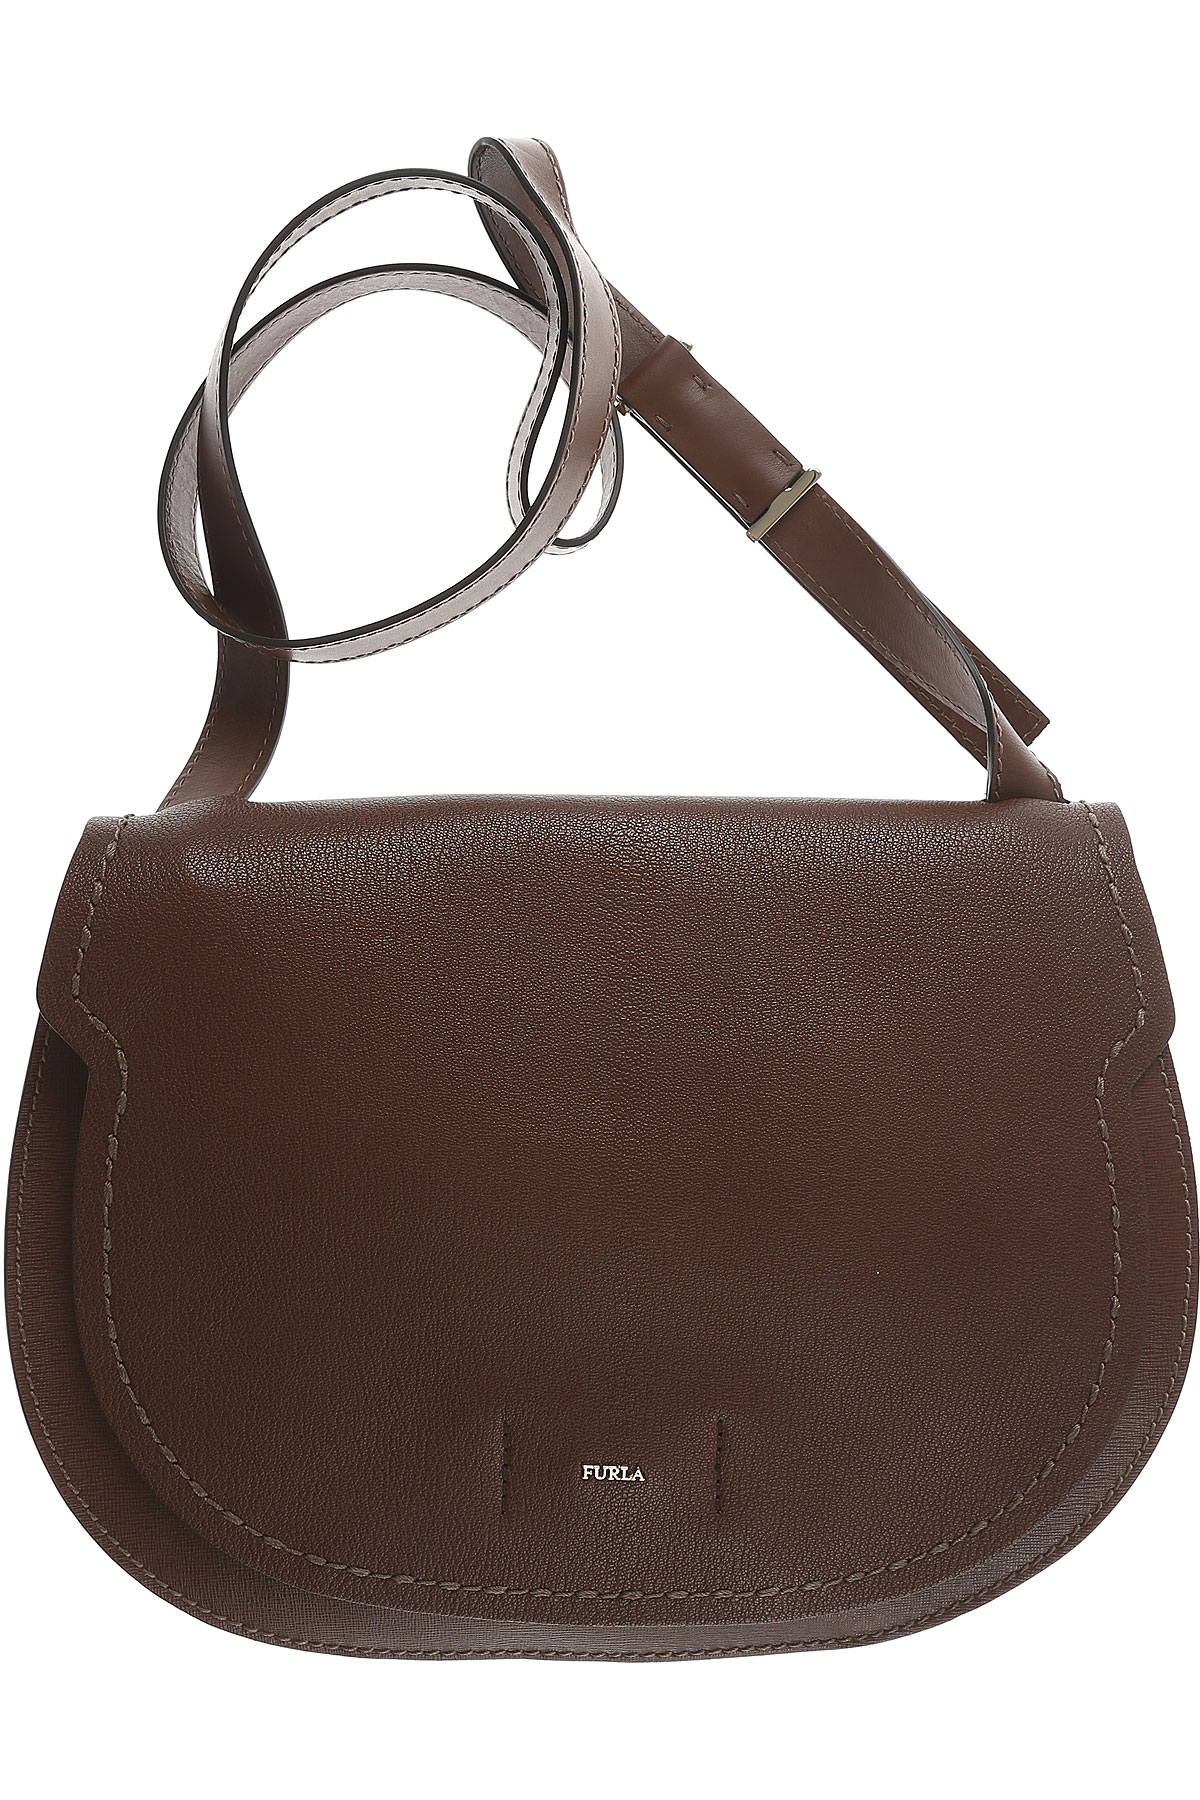 Handbags Furla, Style code: 886369-bkt1-sfk